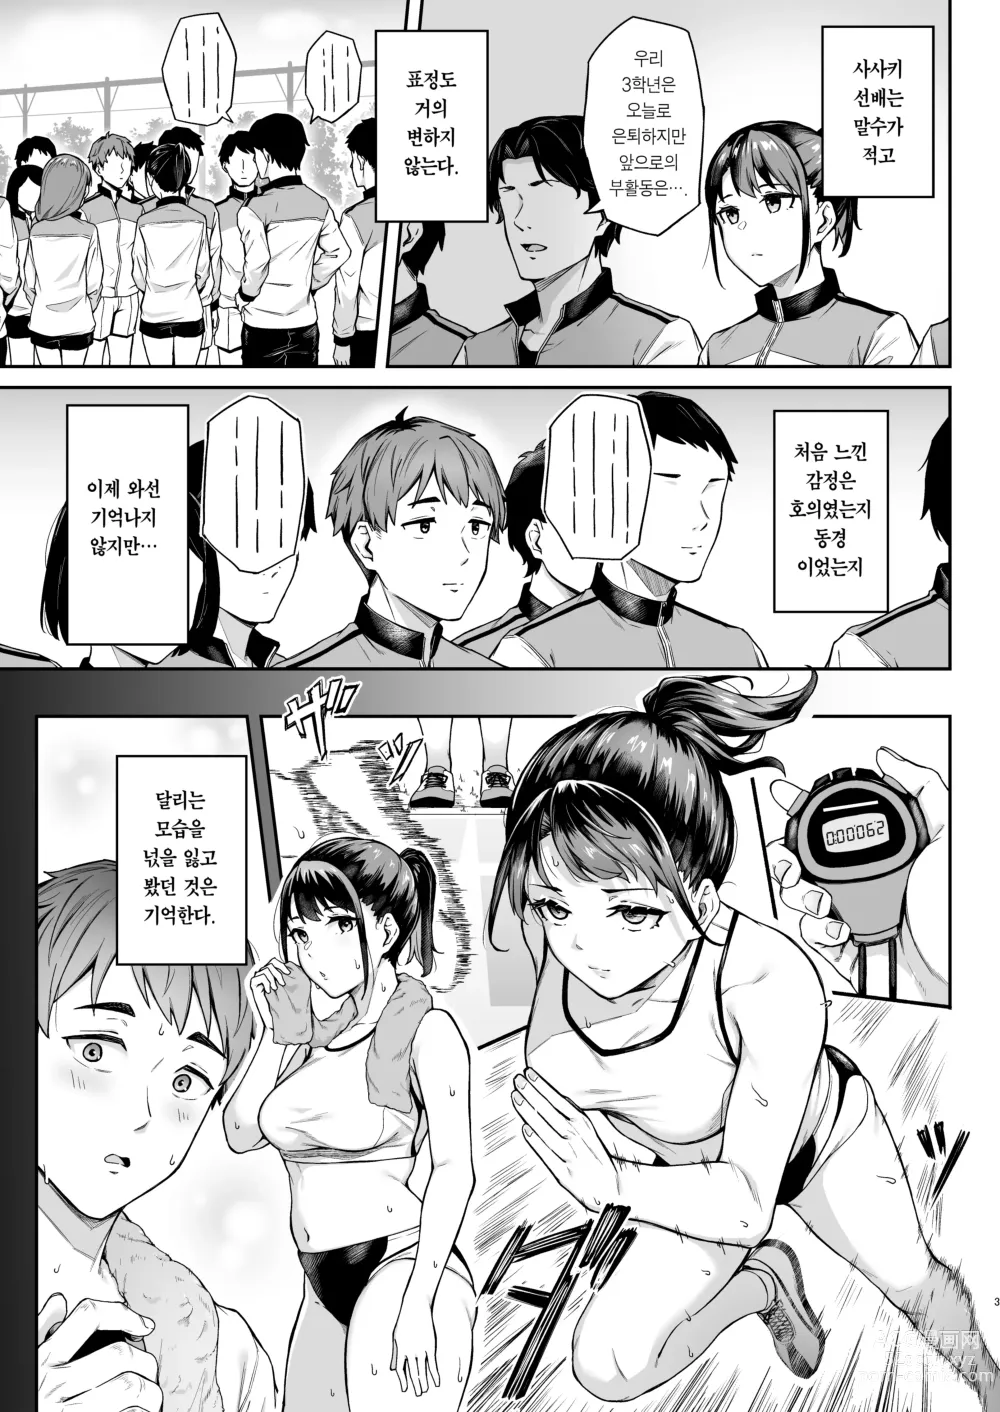 Page 2 of doujinshi 그저 슬픈 척을 한다